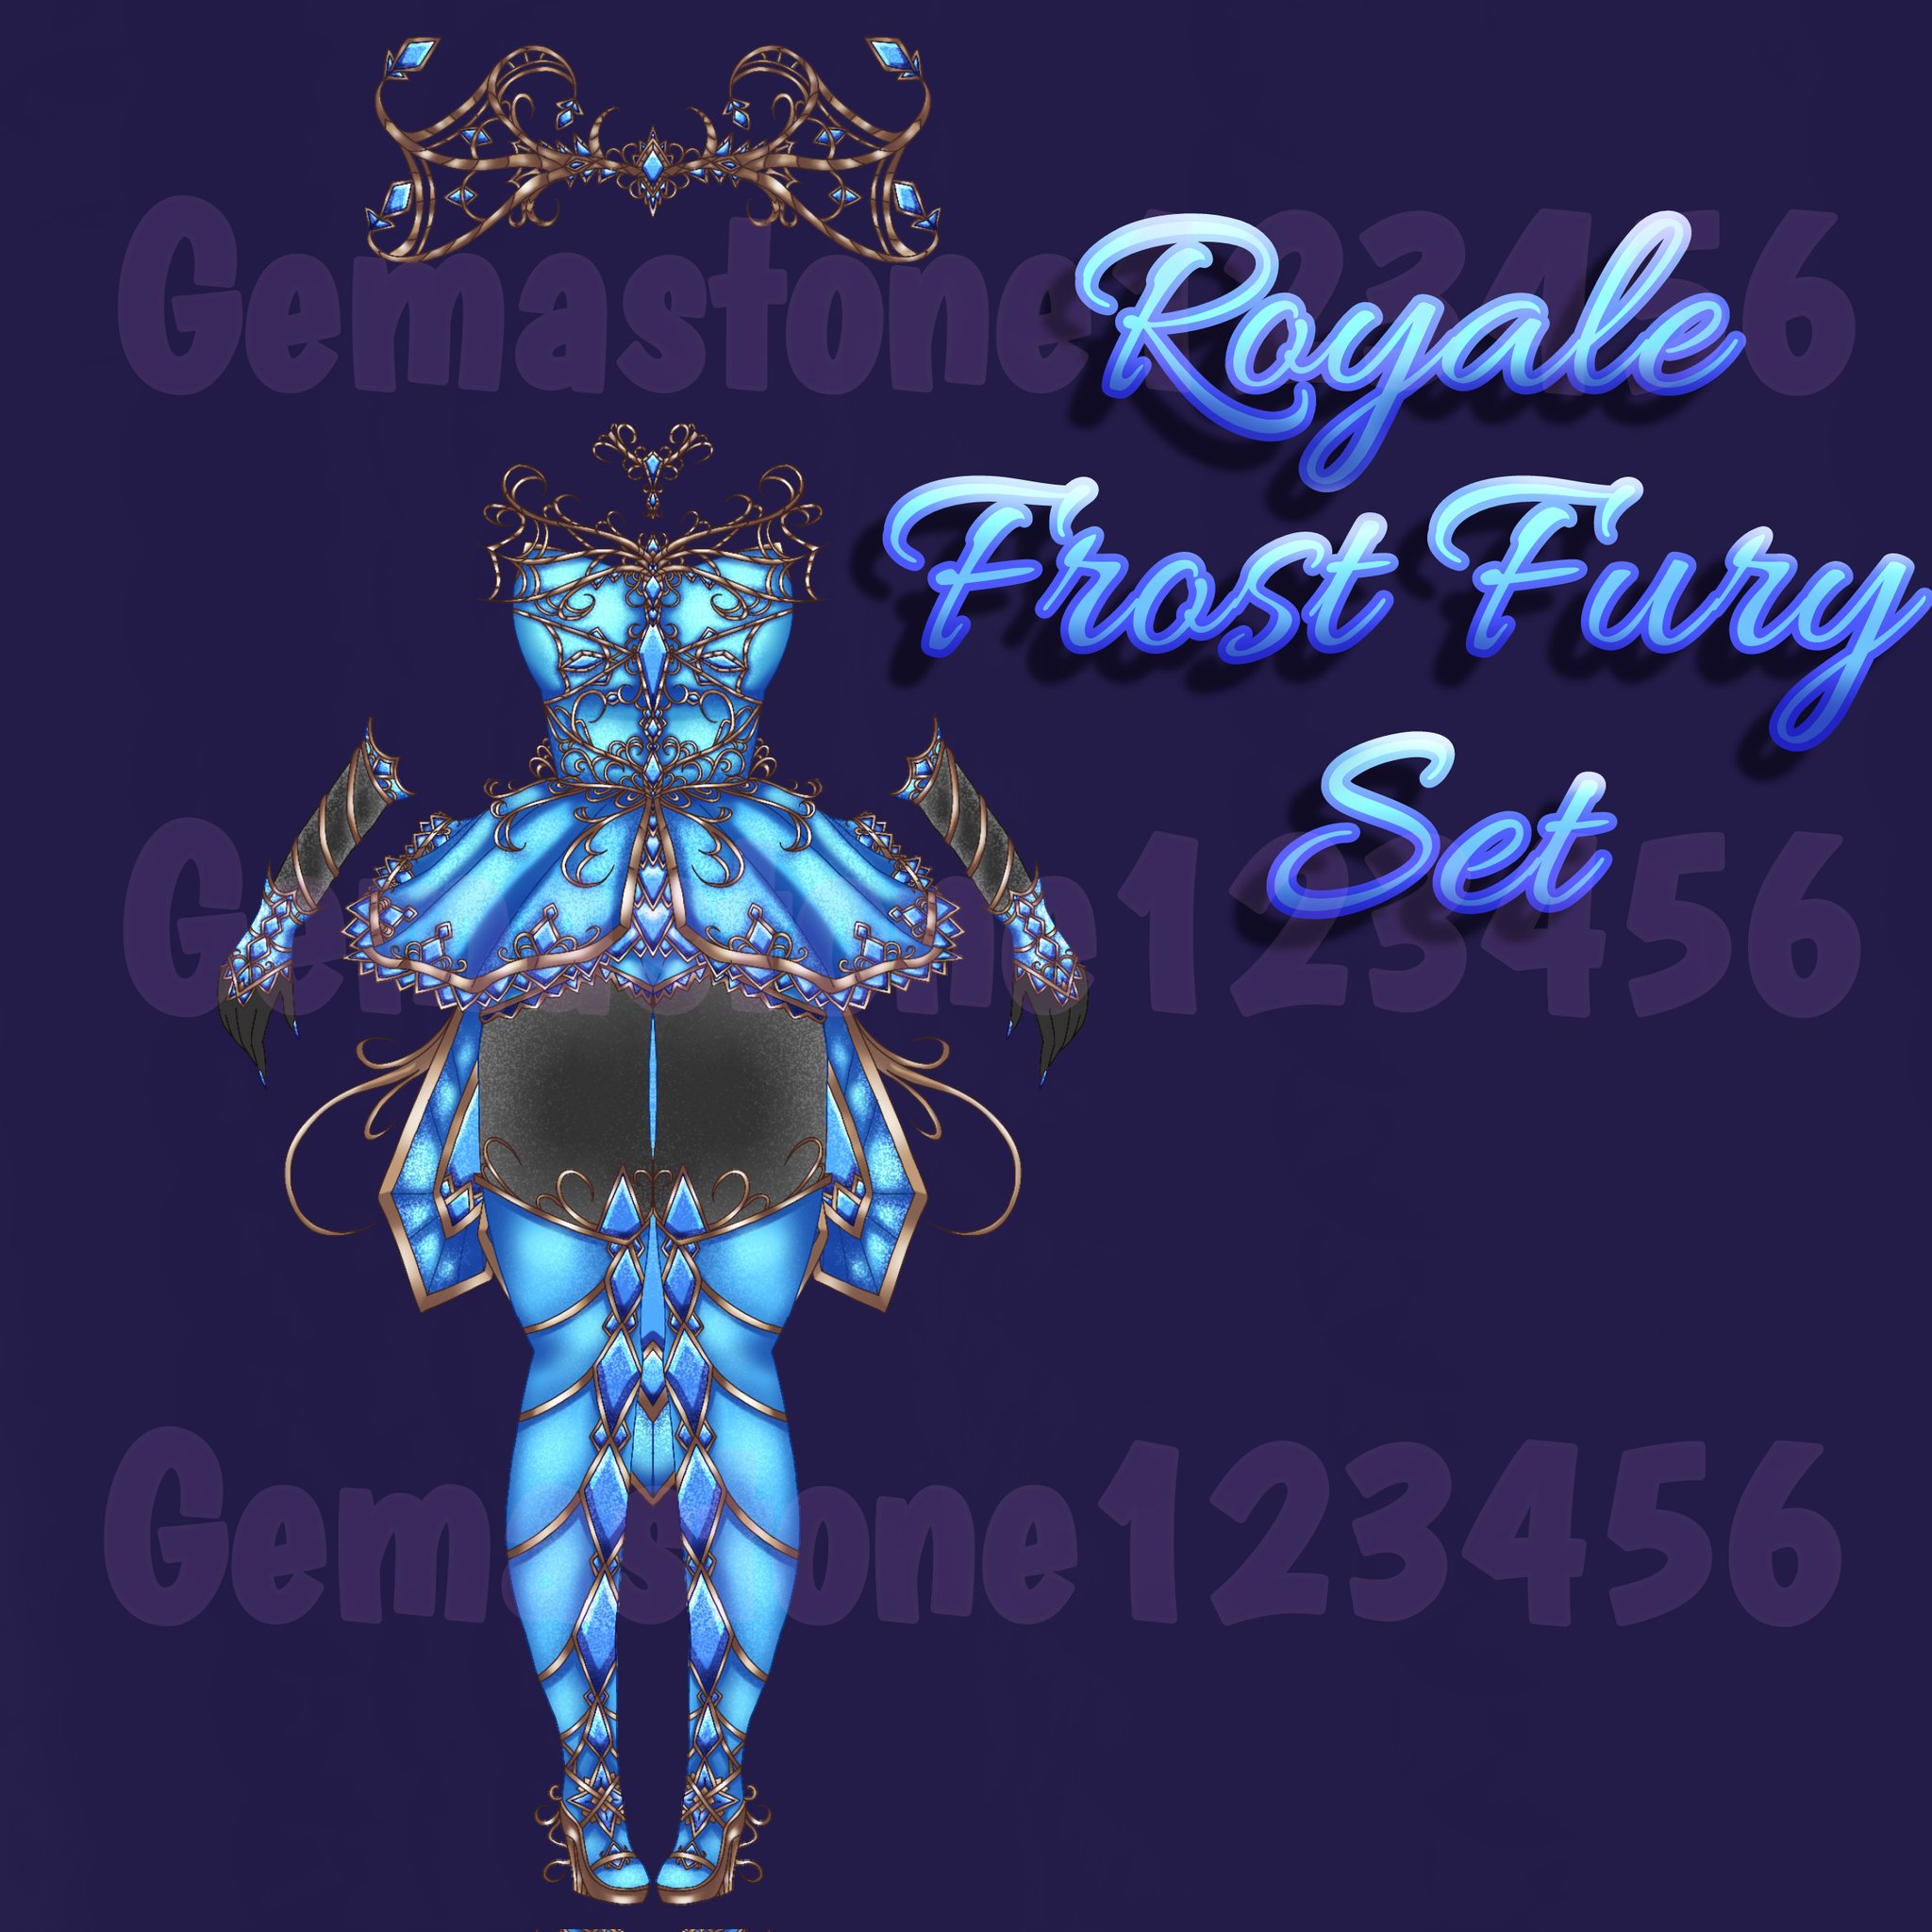 Royale high set by crystal2267 on DeviantArt